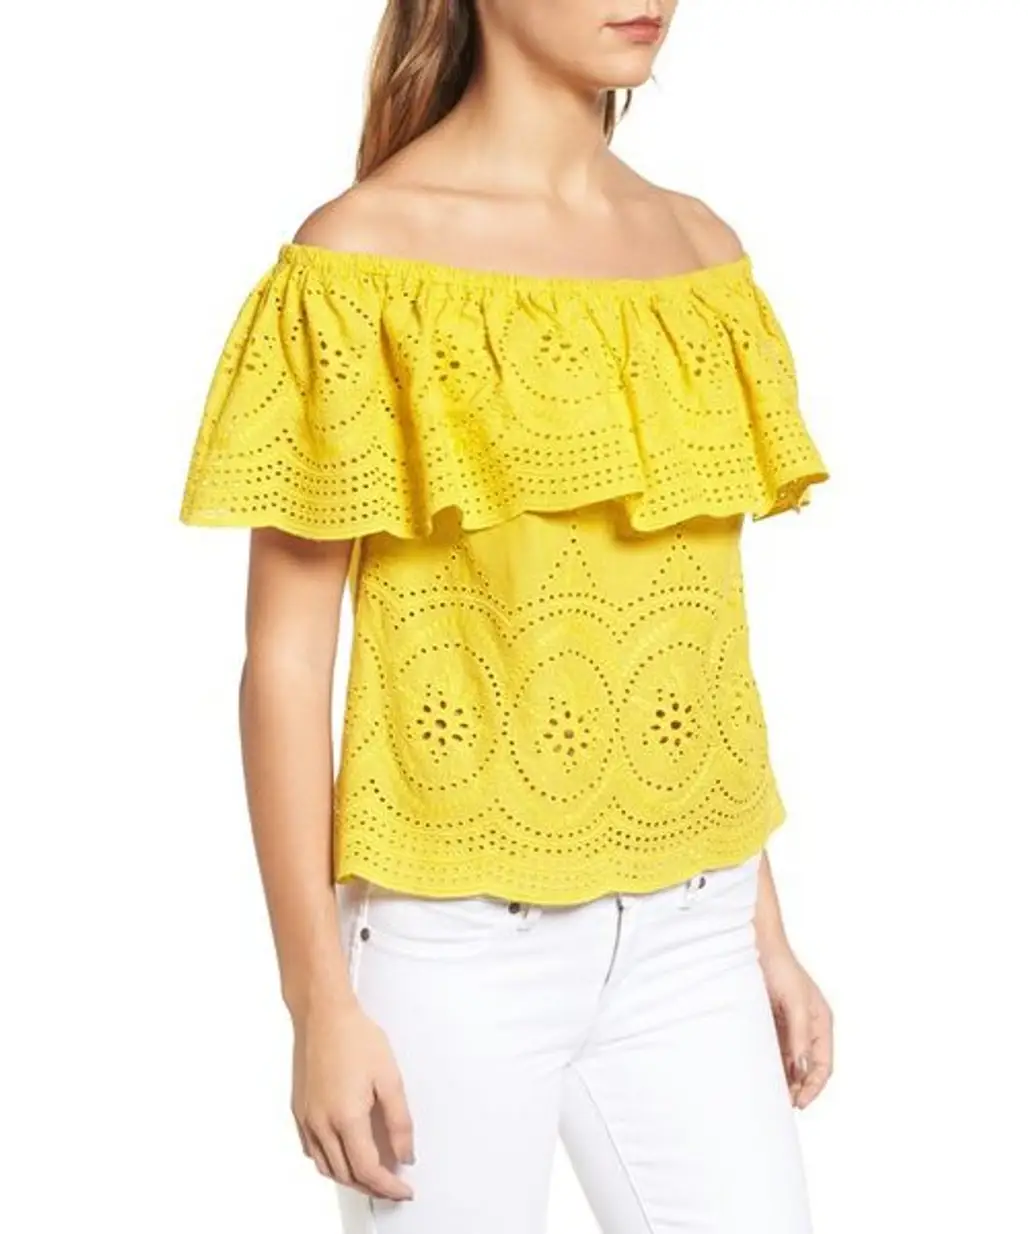 yellow,clothing,sleeve,pattern,peach,